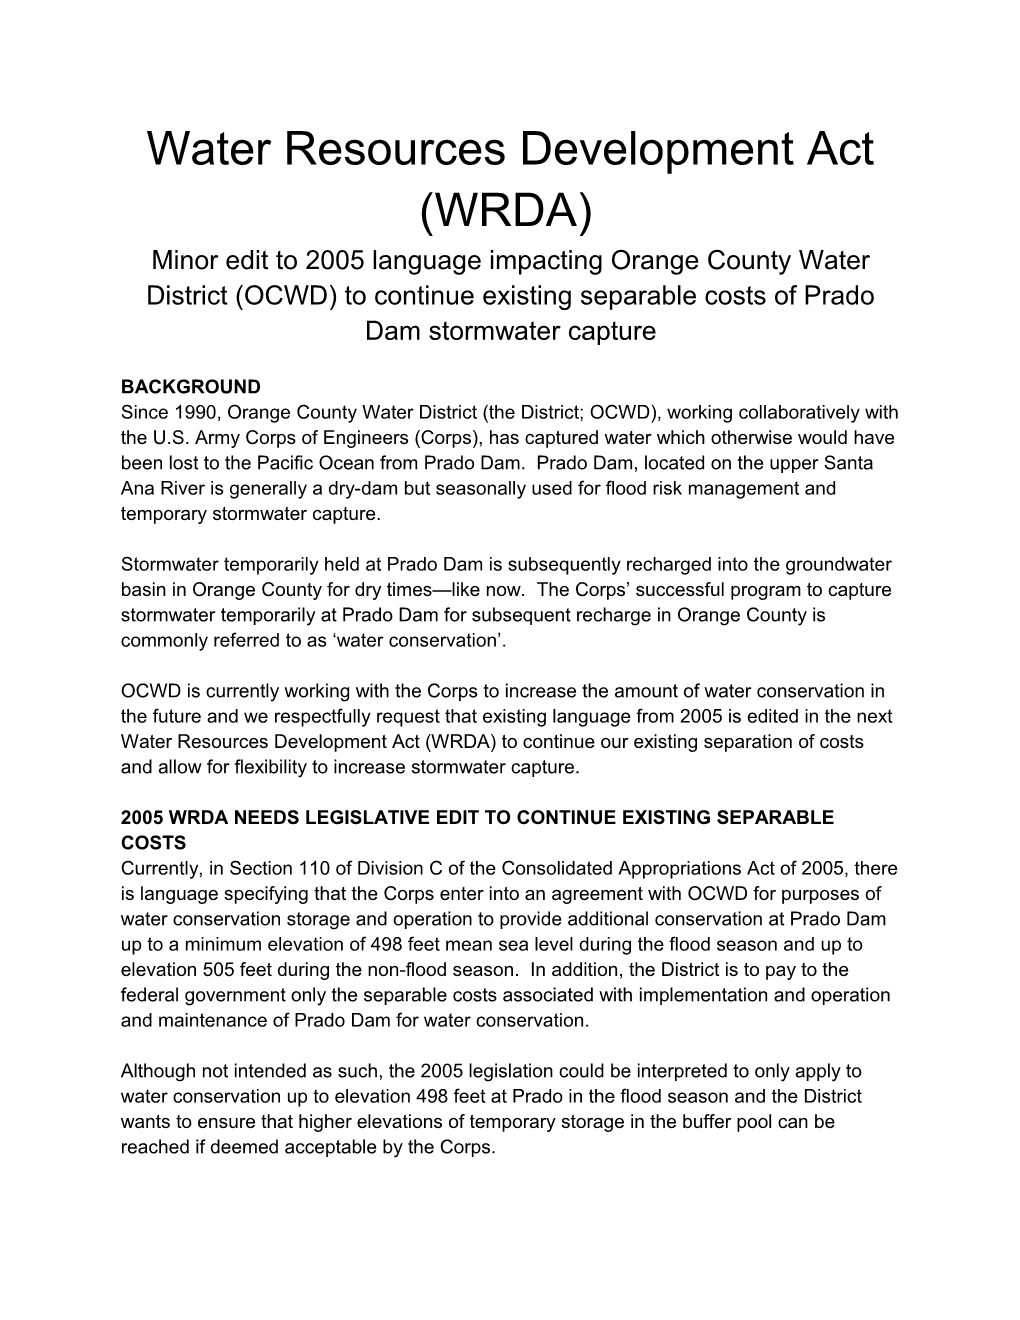 Water Resources Development Act (WRDA)